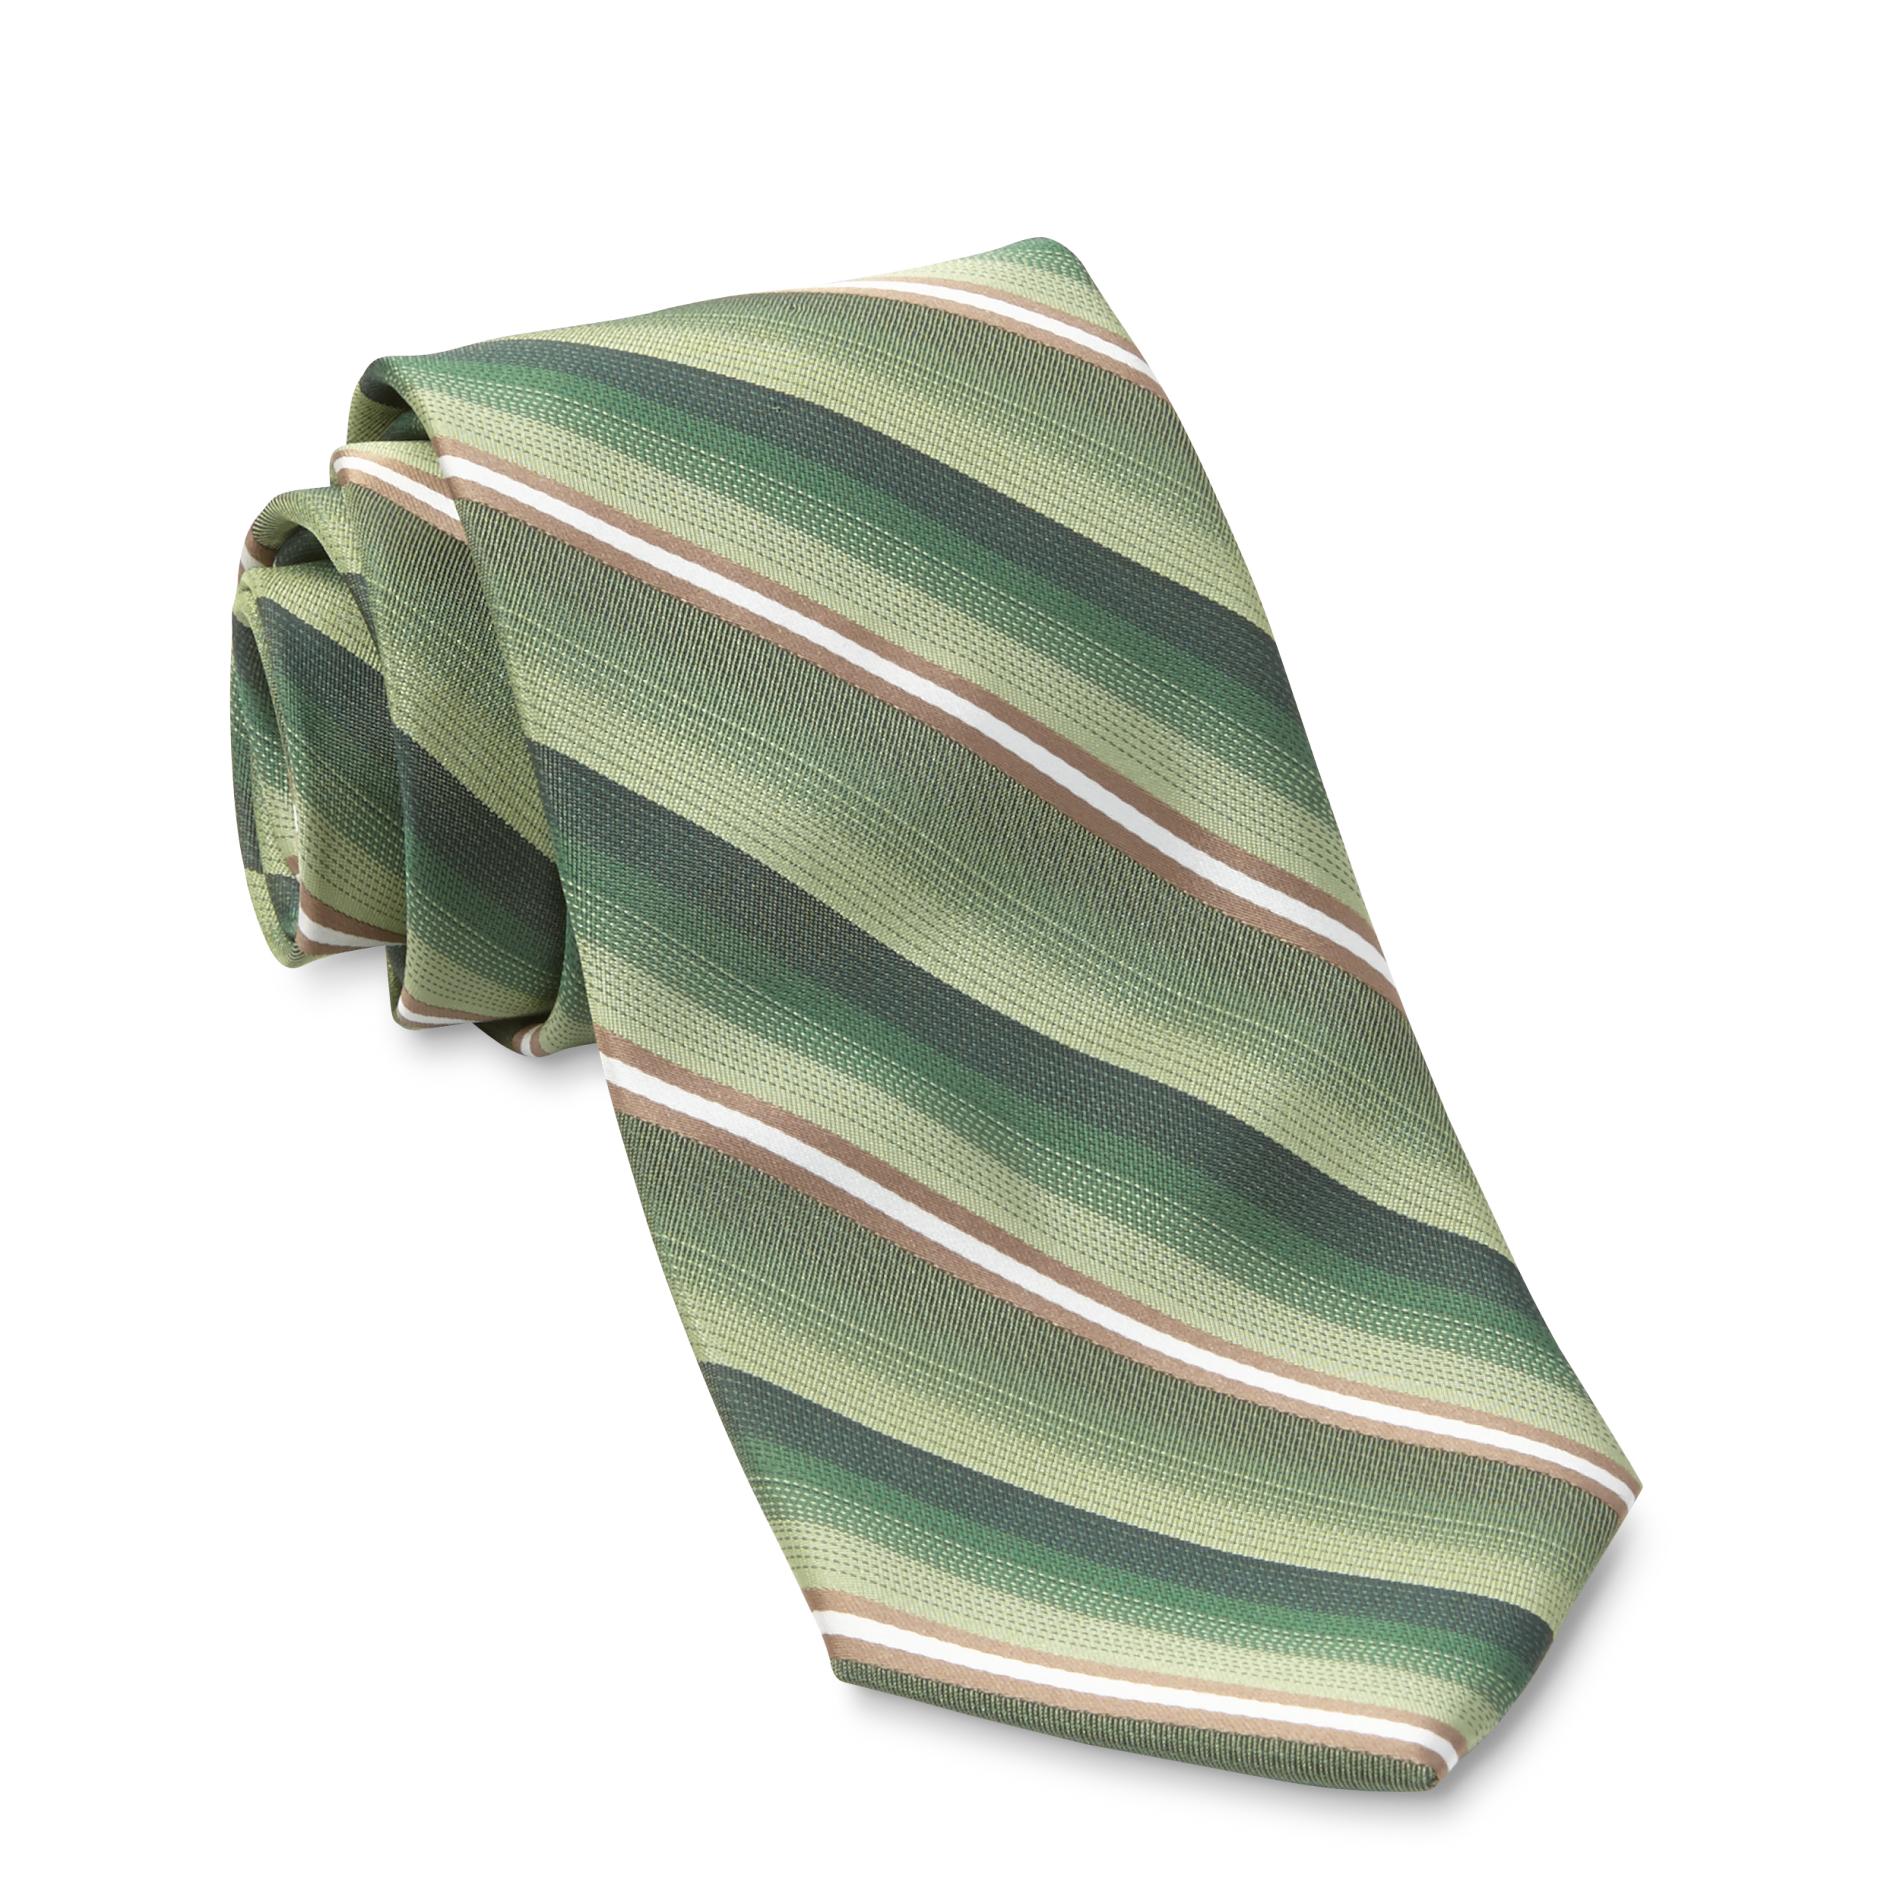 David Taylor Collection Men's Satin Necktie - Striped